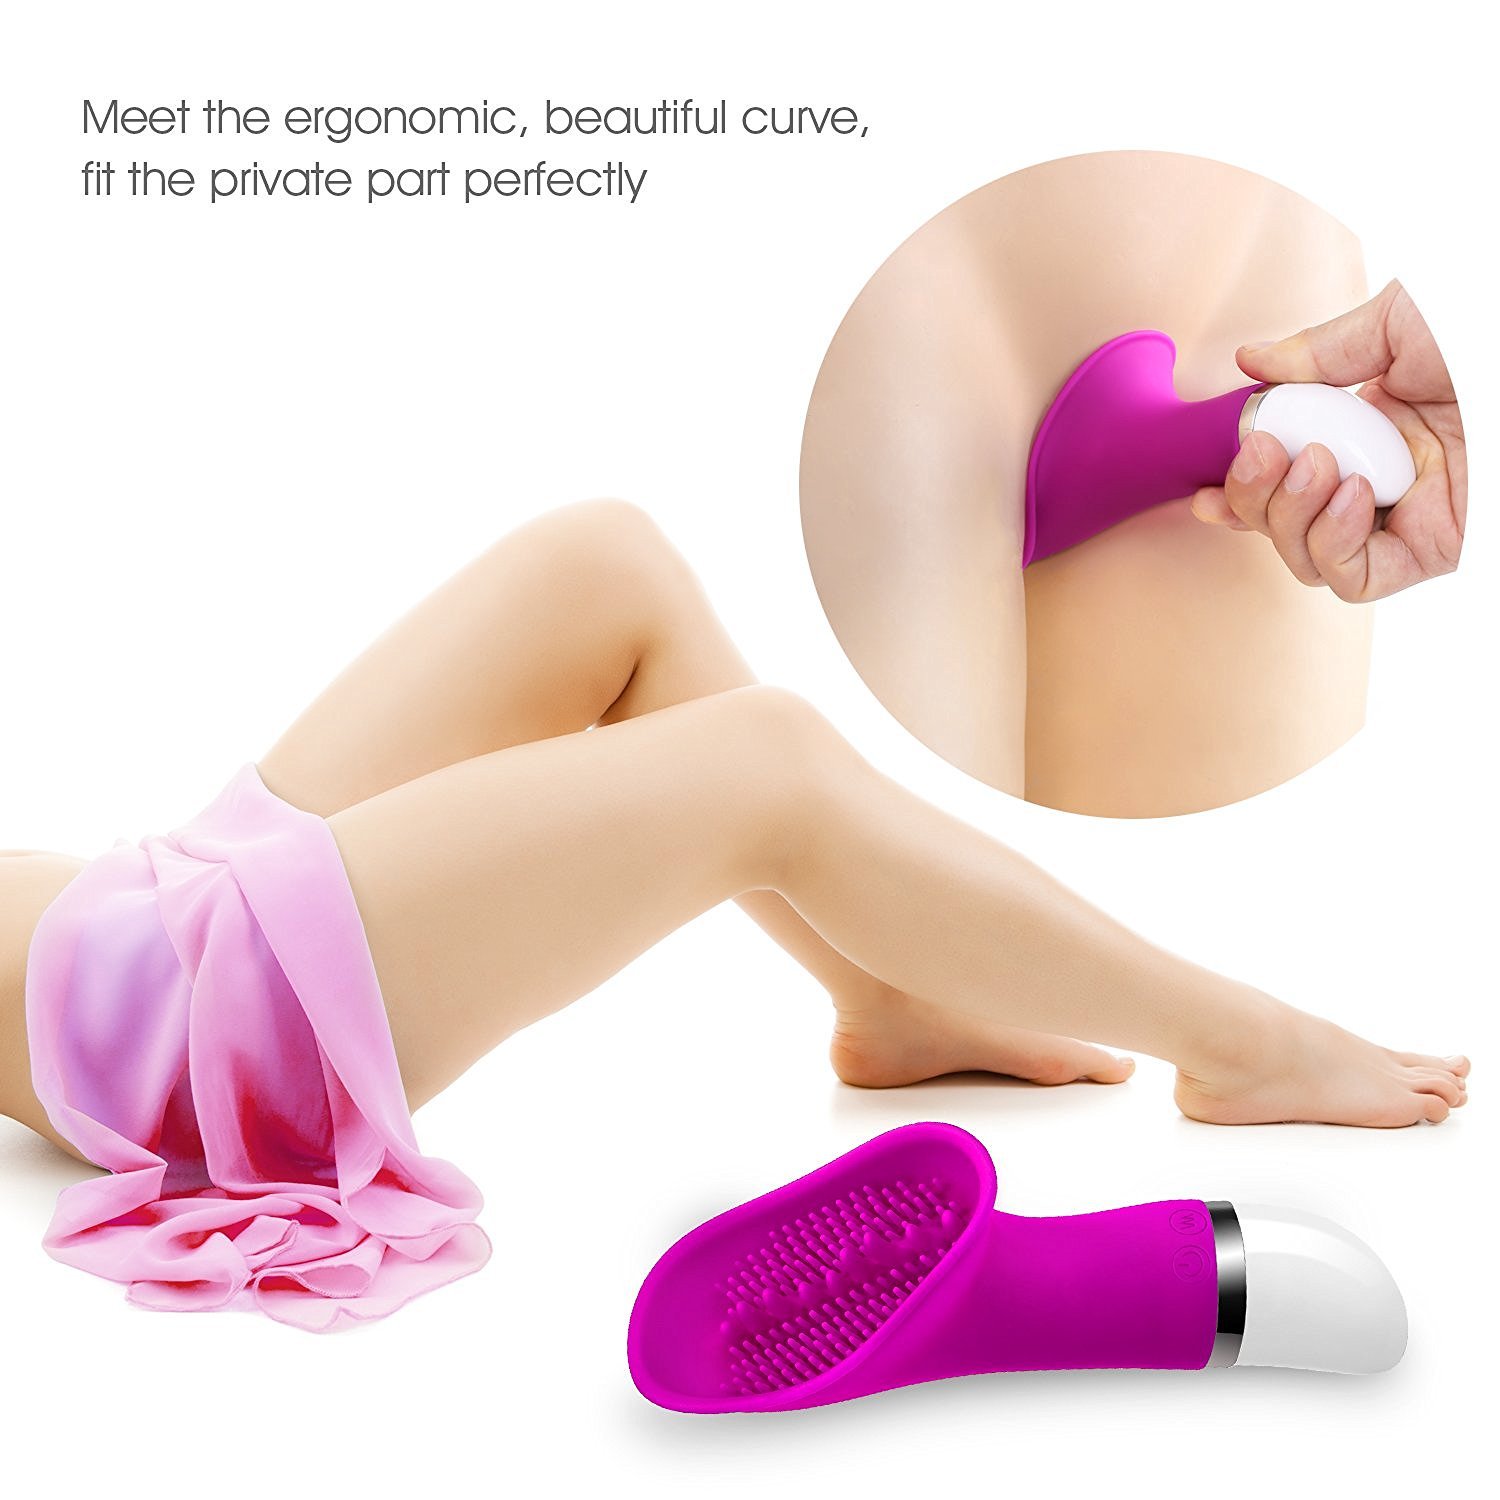 Clitoris stimulation with shower massage